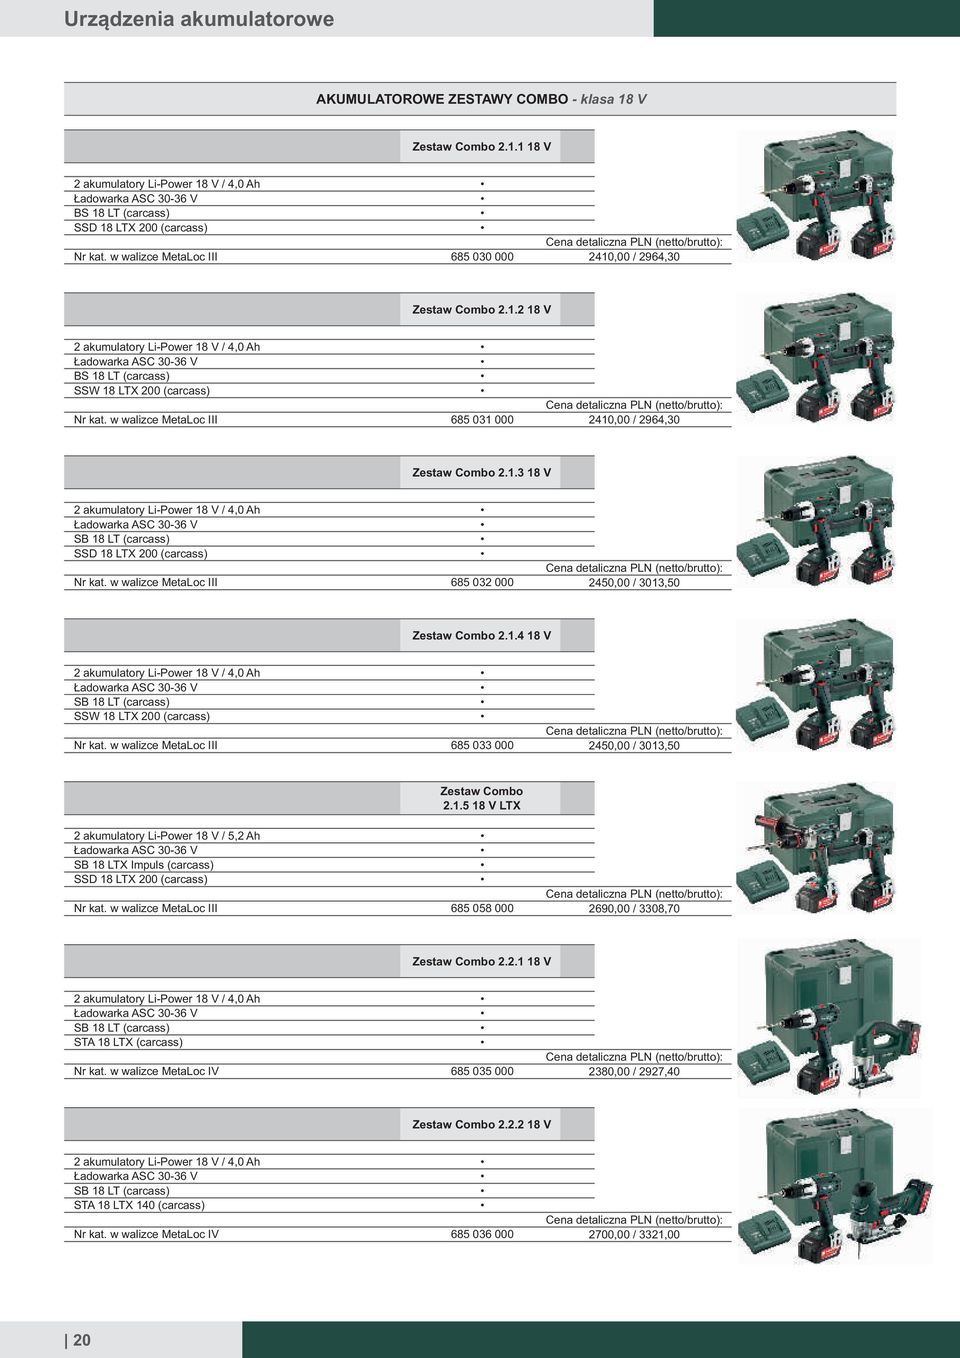 1.3 18 2 akumulatory Li-Power 18 / 4,0 Ah Ładowarka ASC 30-36 SB 18 LT (carcass) SSD 18 LTX 200 (carcass) w walizce MetaLoc III 685 032 000 2450,00 / 3013,50 Zestaw Combo 2.1.4 18 2 akumulatory Li-Power 18 / 4,0 Ah Ładowarka ASC 30-36 SB 18 LT (carcass) SSW 18 LTX 200 (carcass) w walizce MetaLoc III 685 033 000 2450,00 / 3013,50 Zestaw Combo 2.